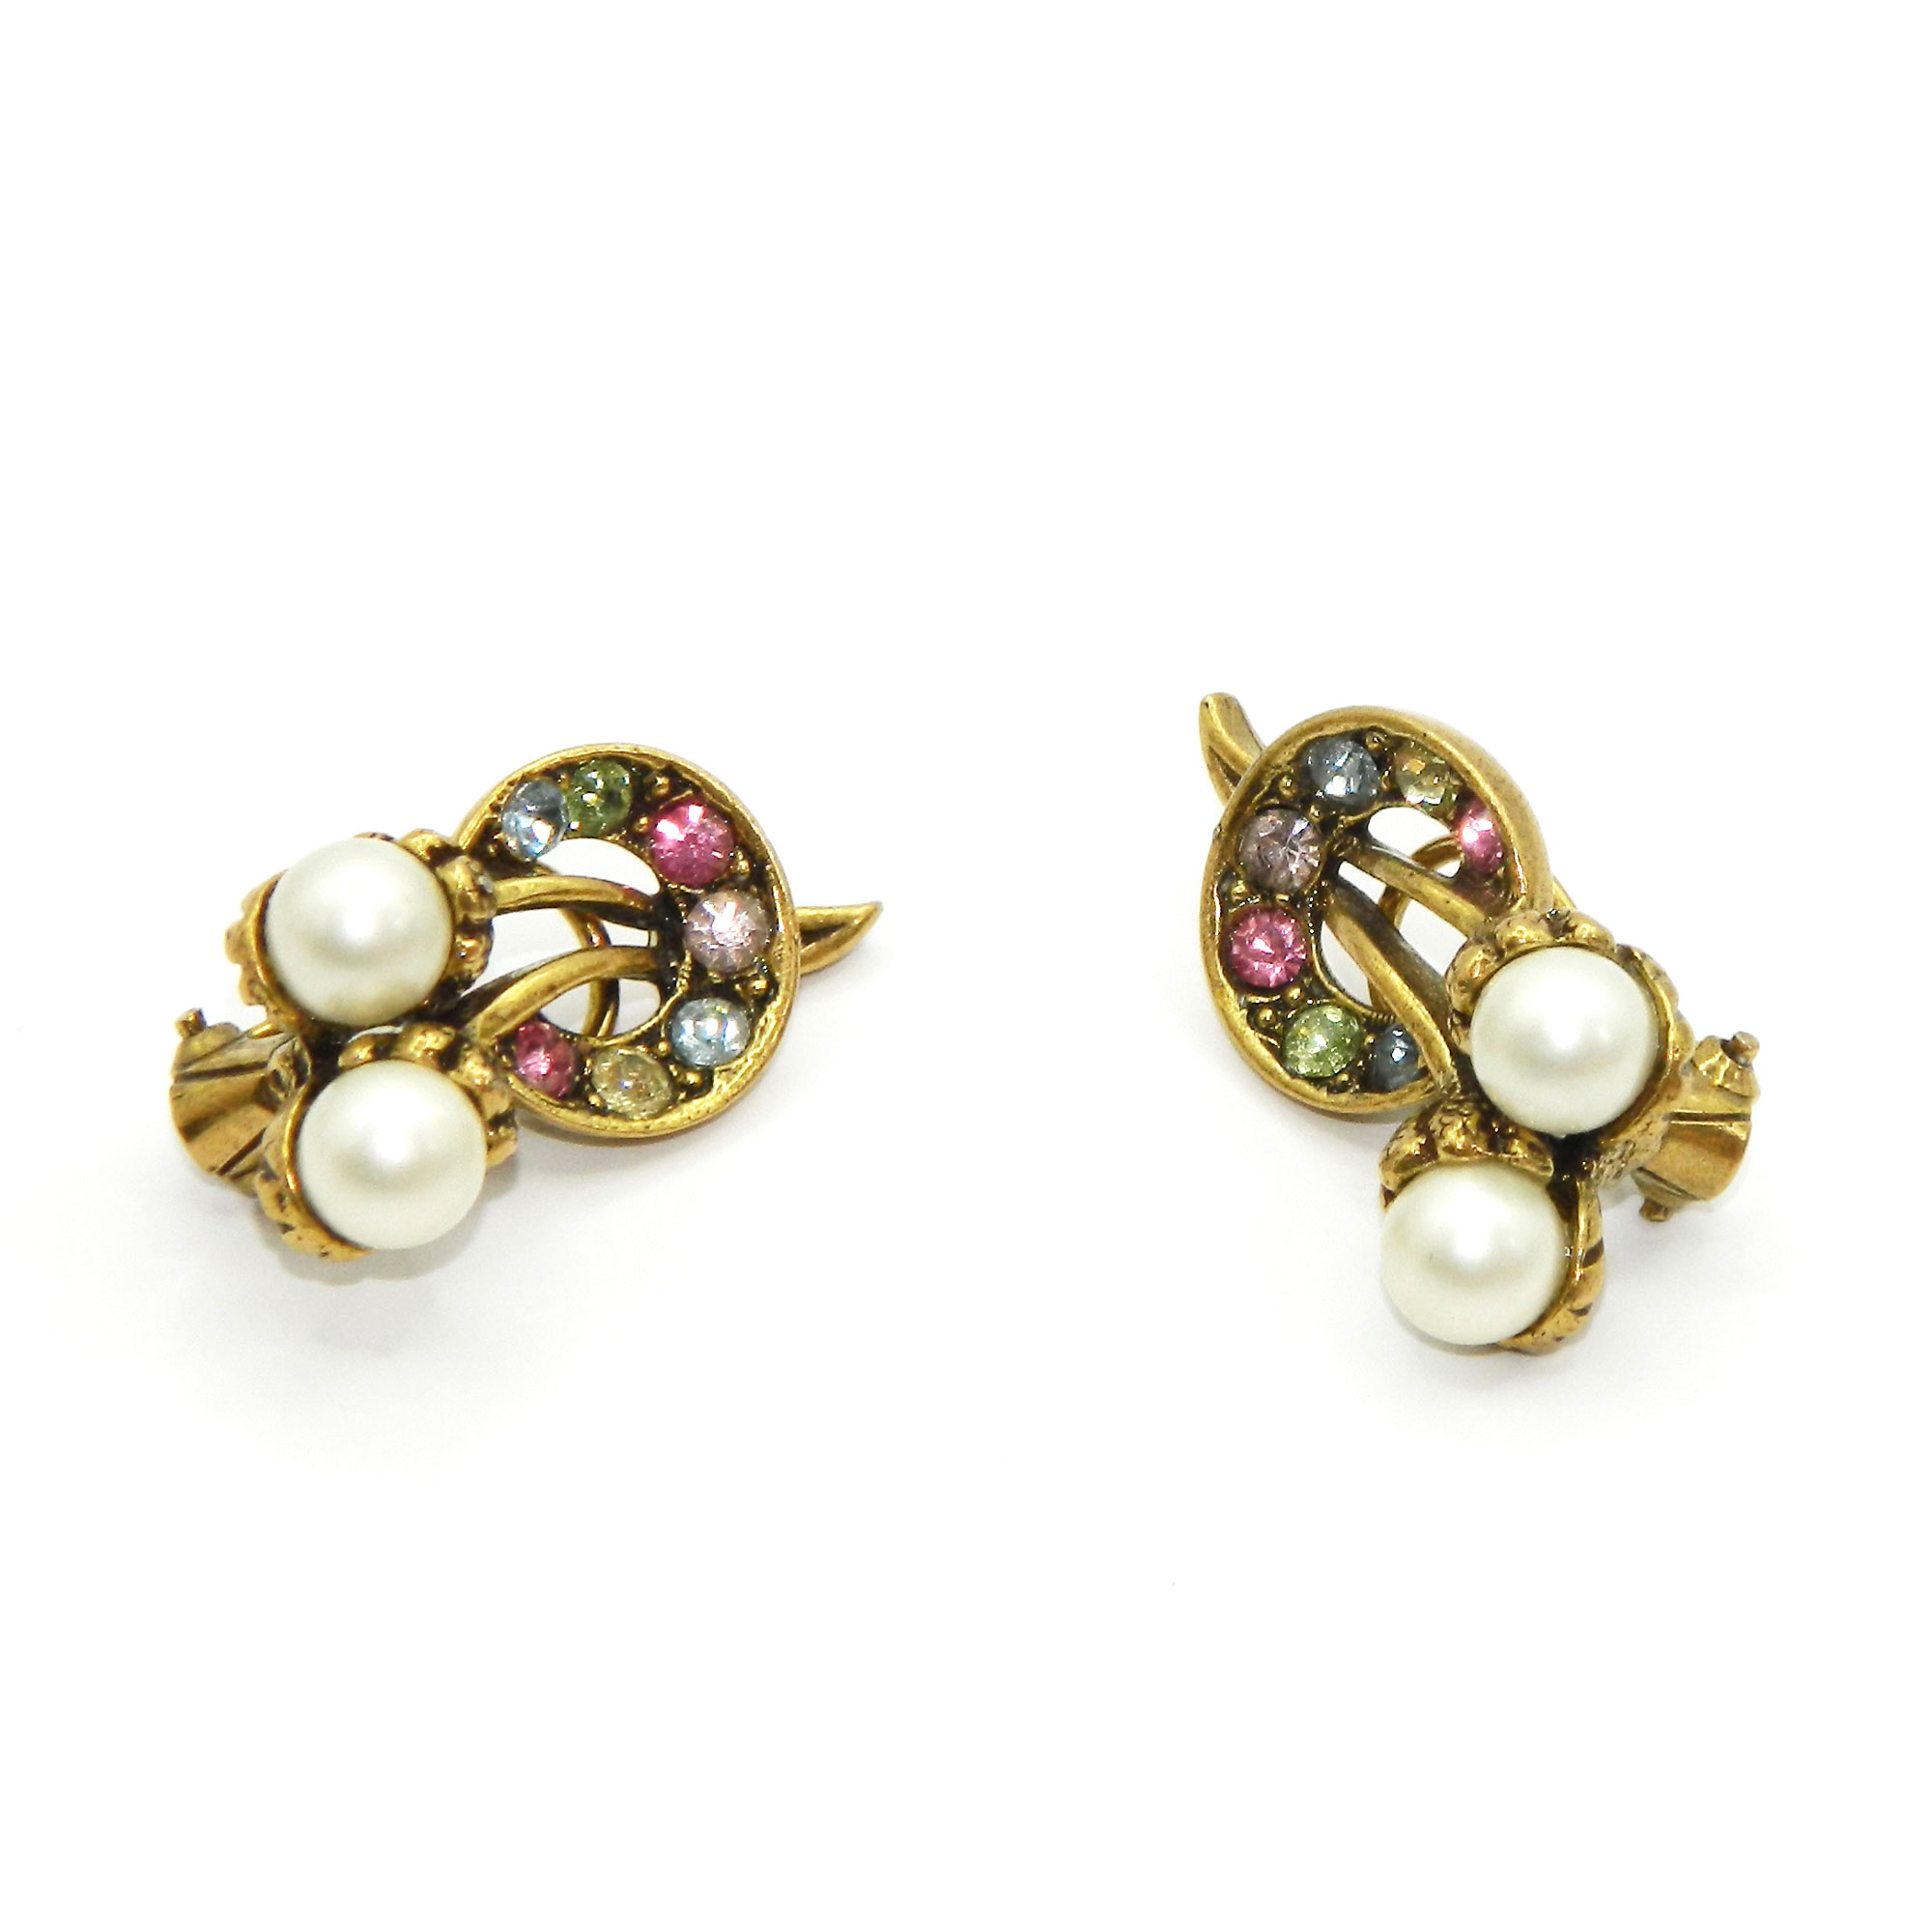 1950s rhinestone and faux pearl earrings